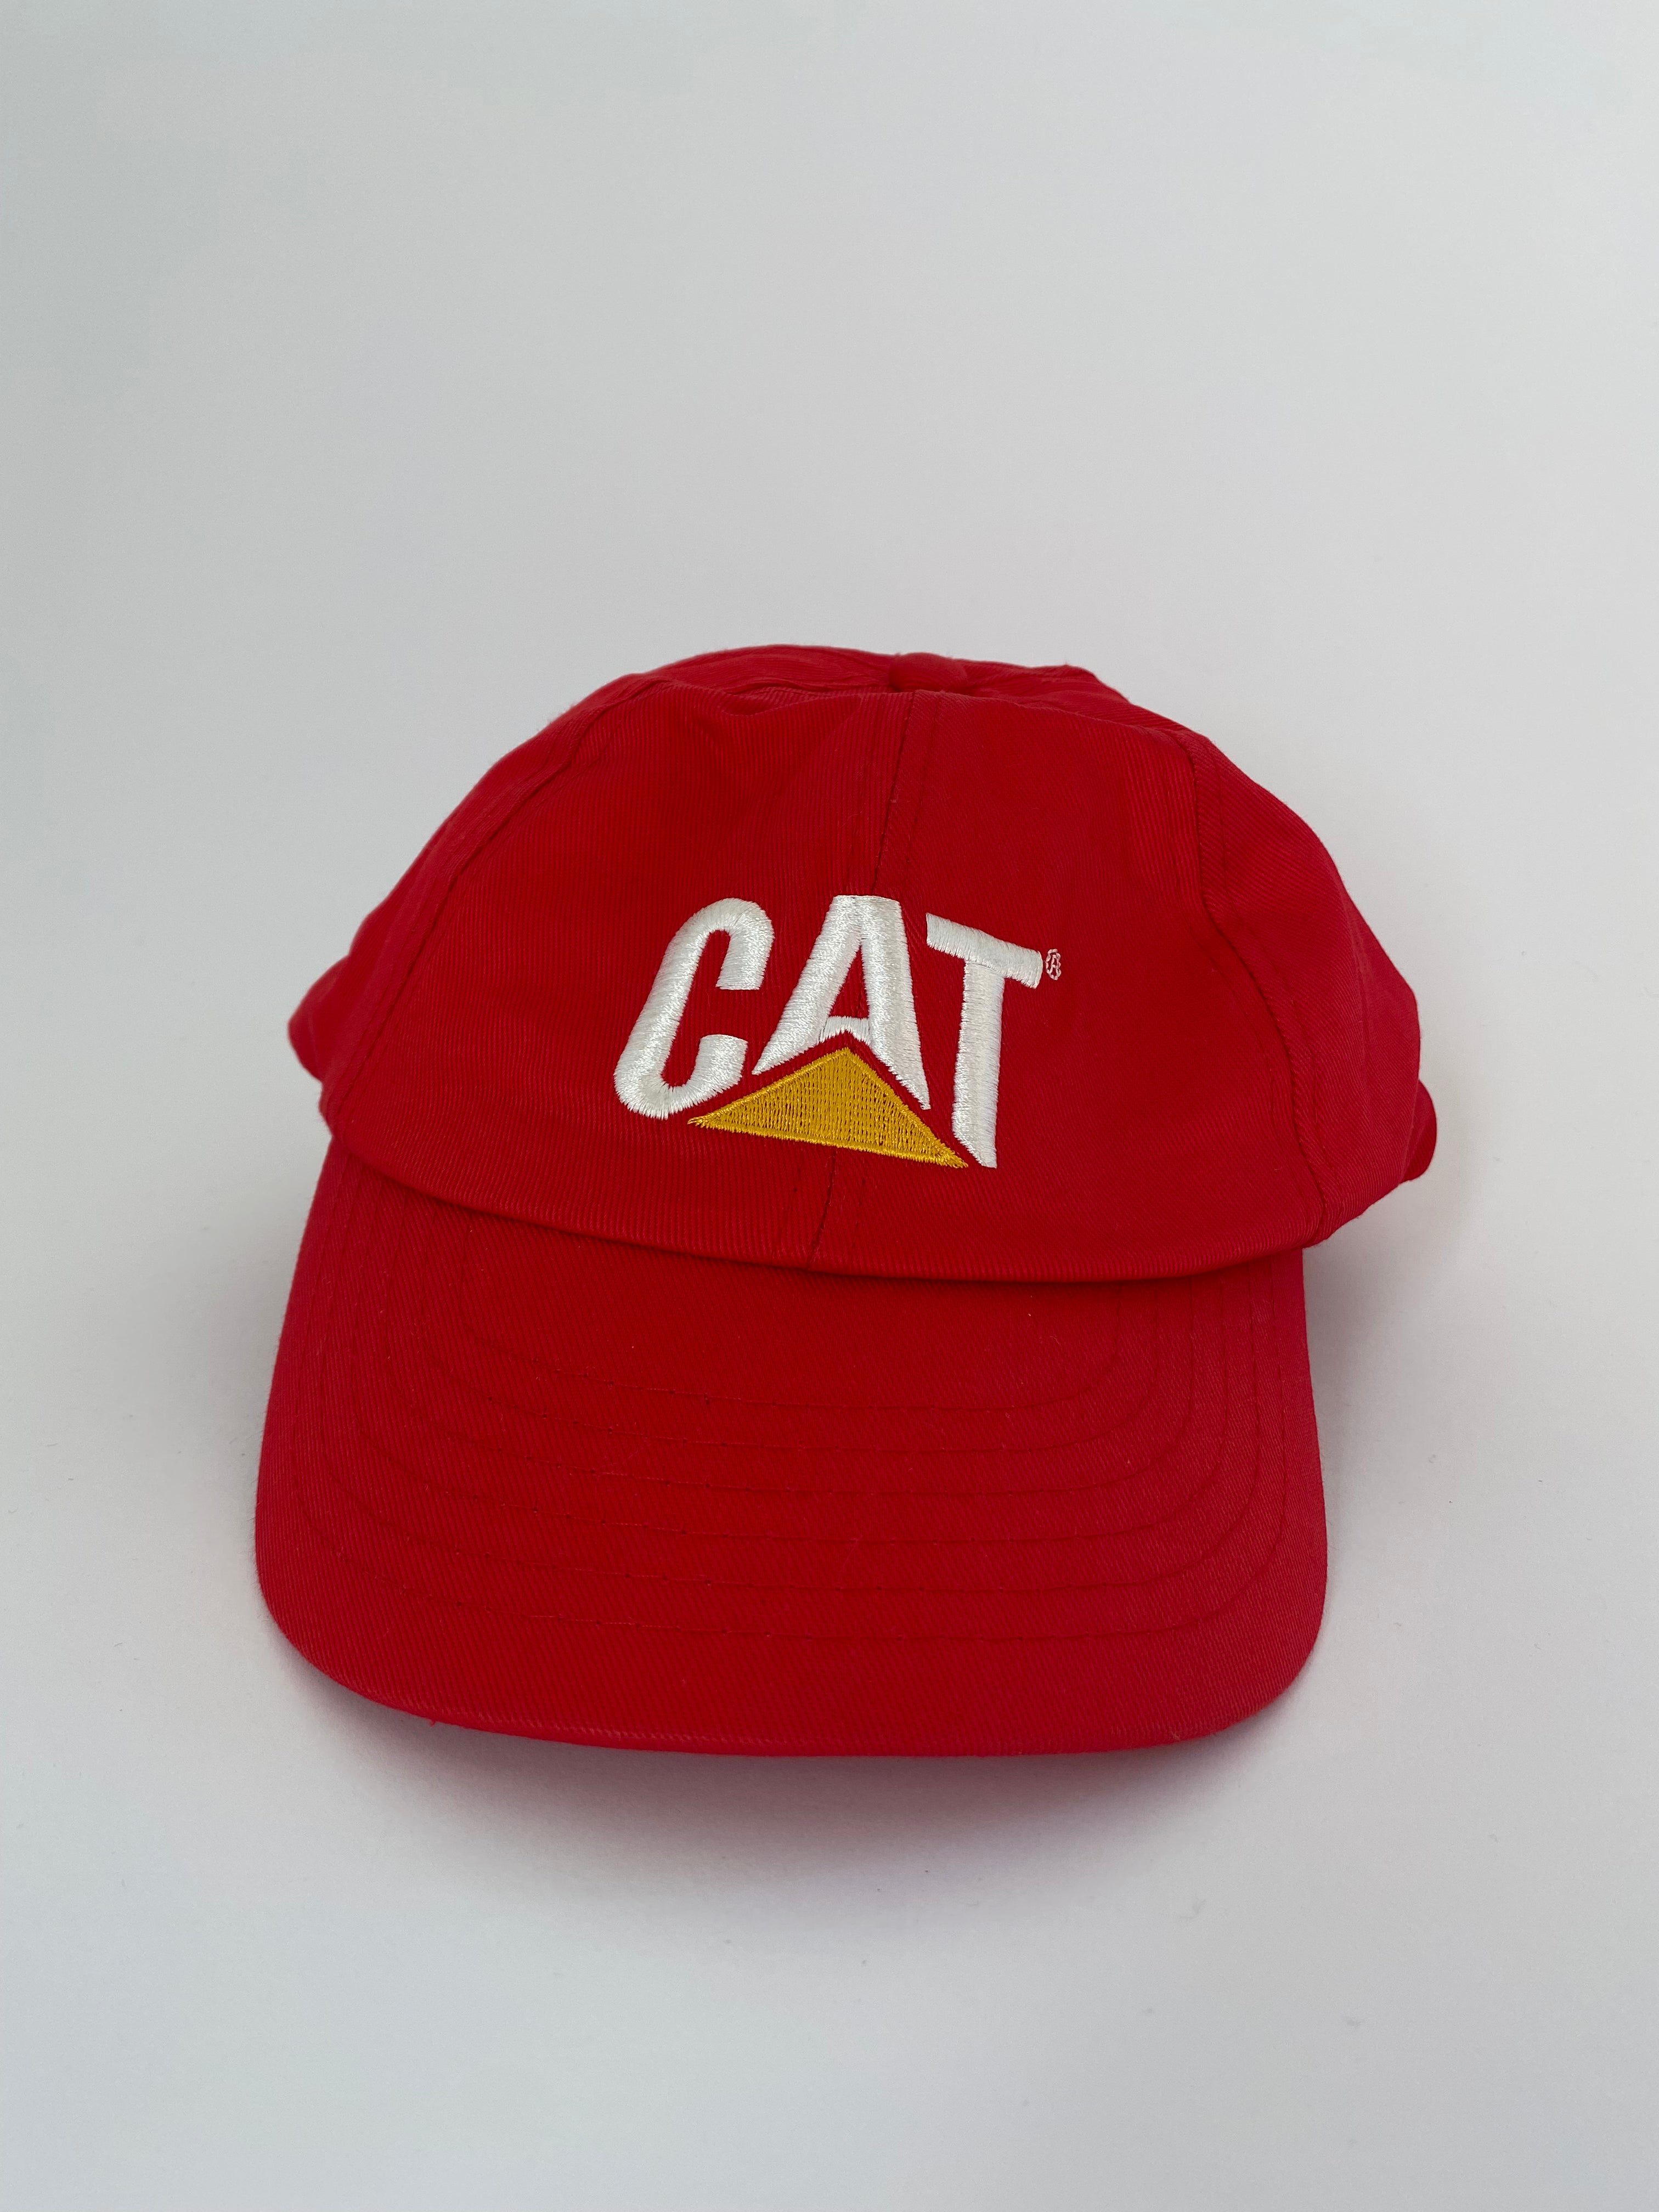 Vintage CAT Baseball Cap